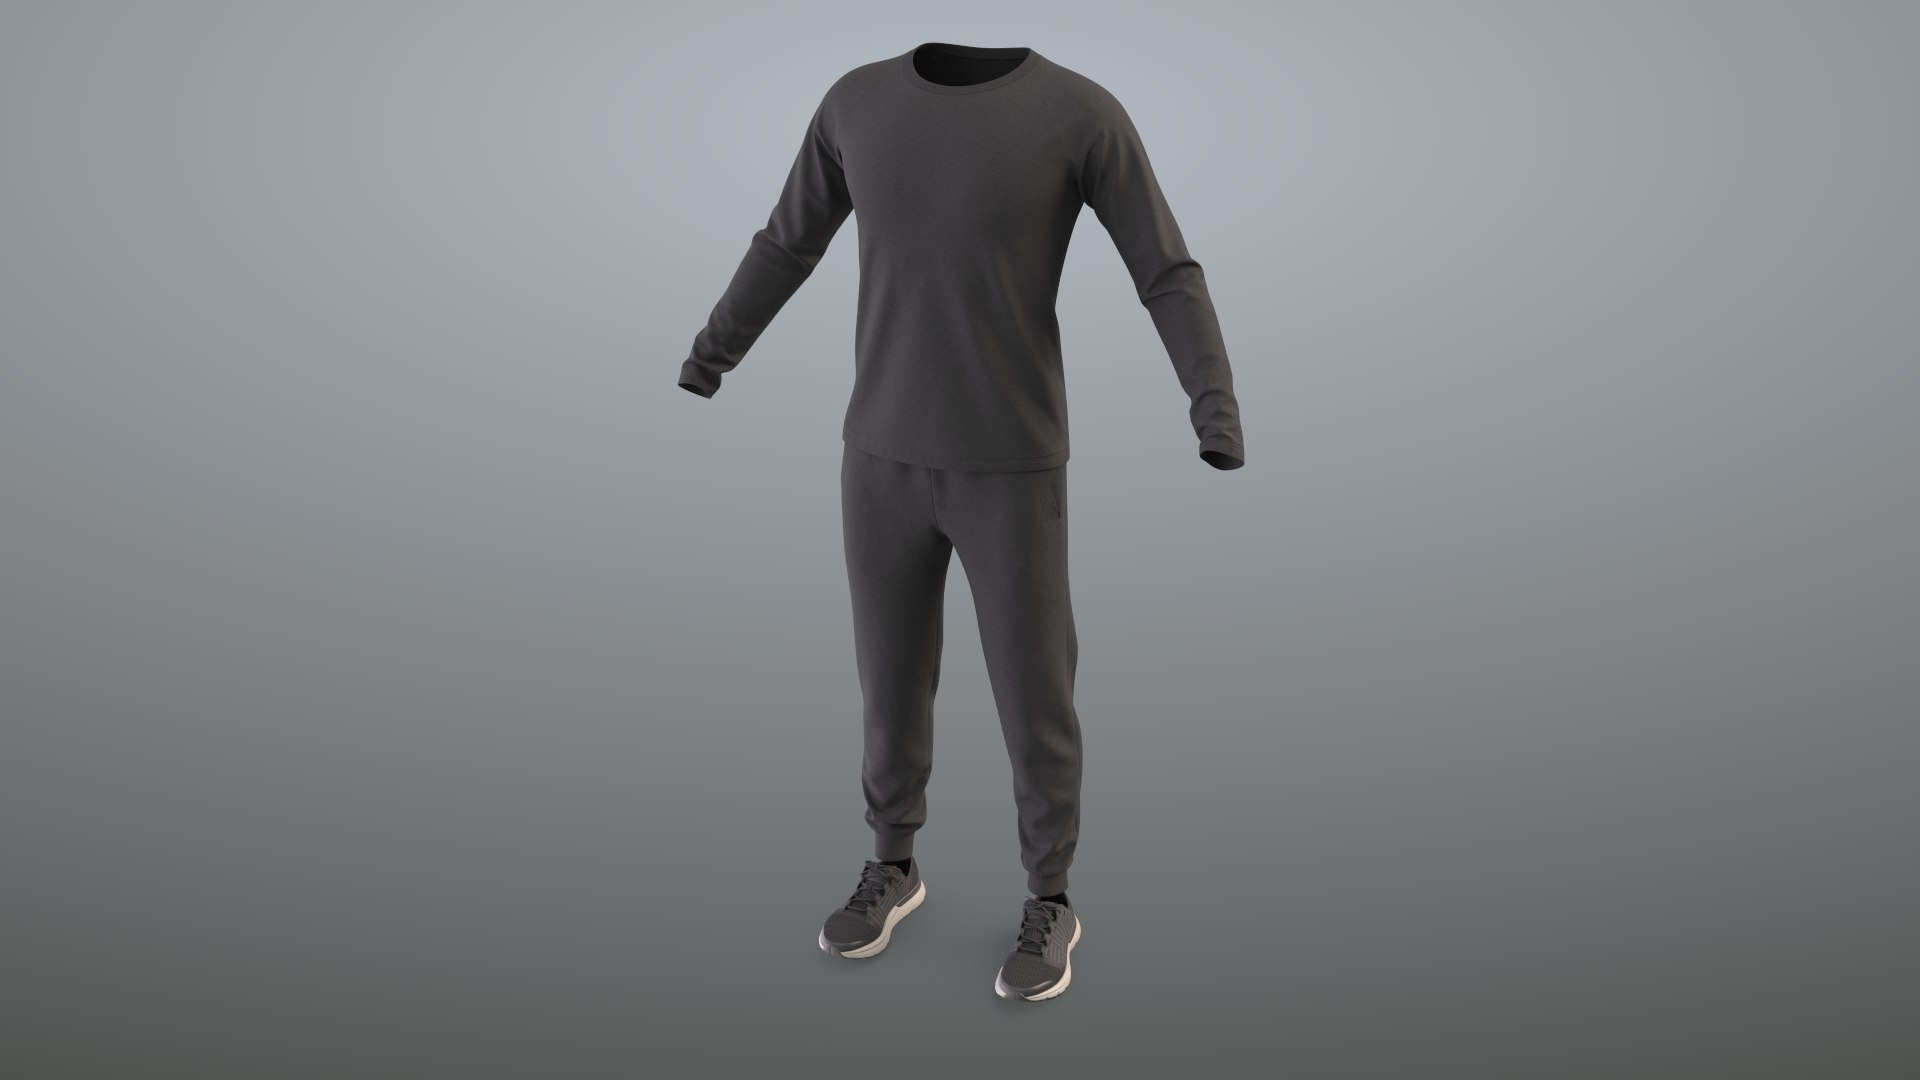 Realistic sportswear suit clothing 3D model - TurboSquid 1512925